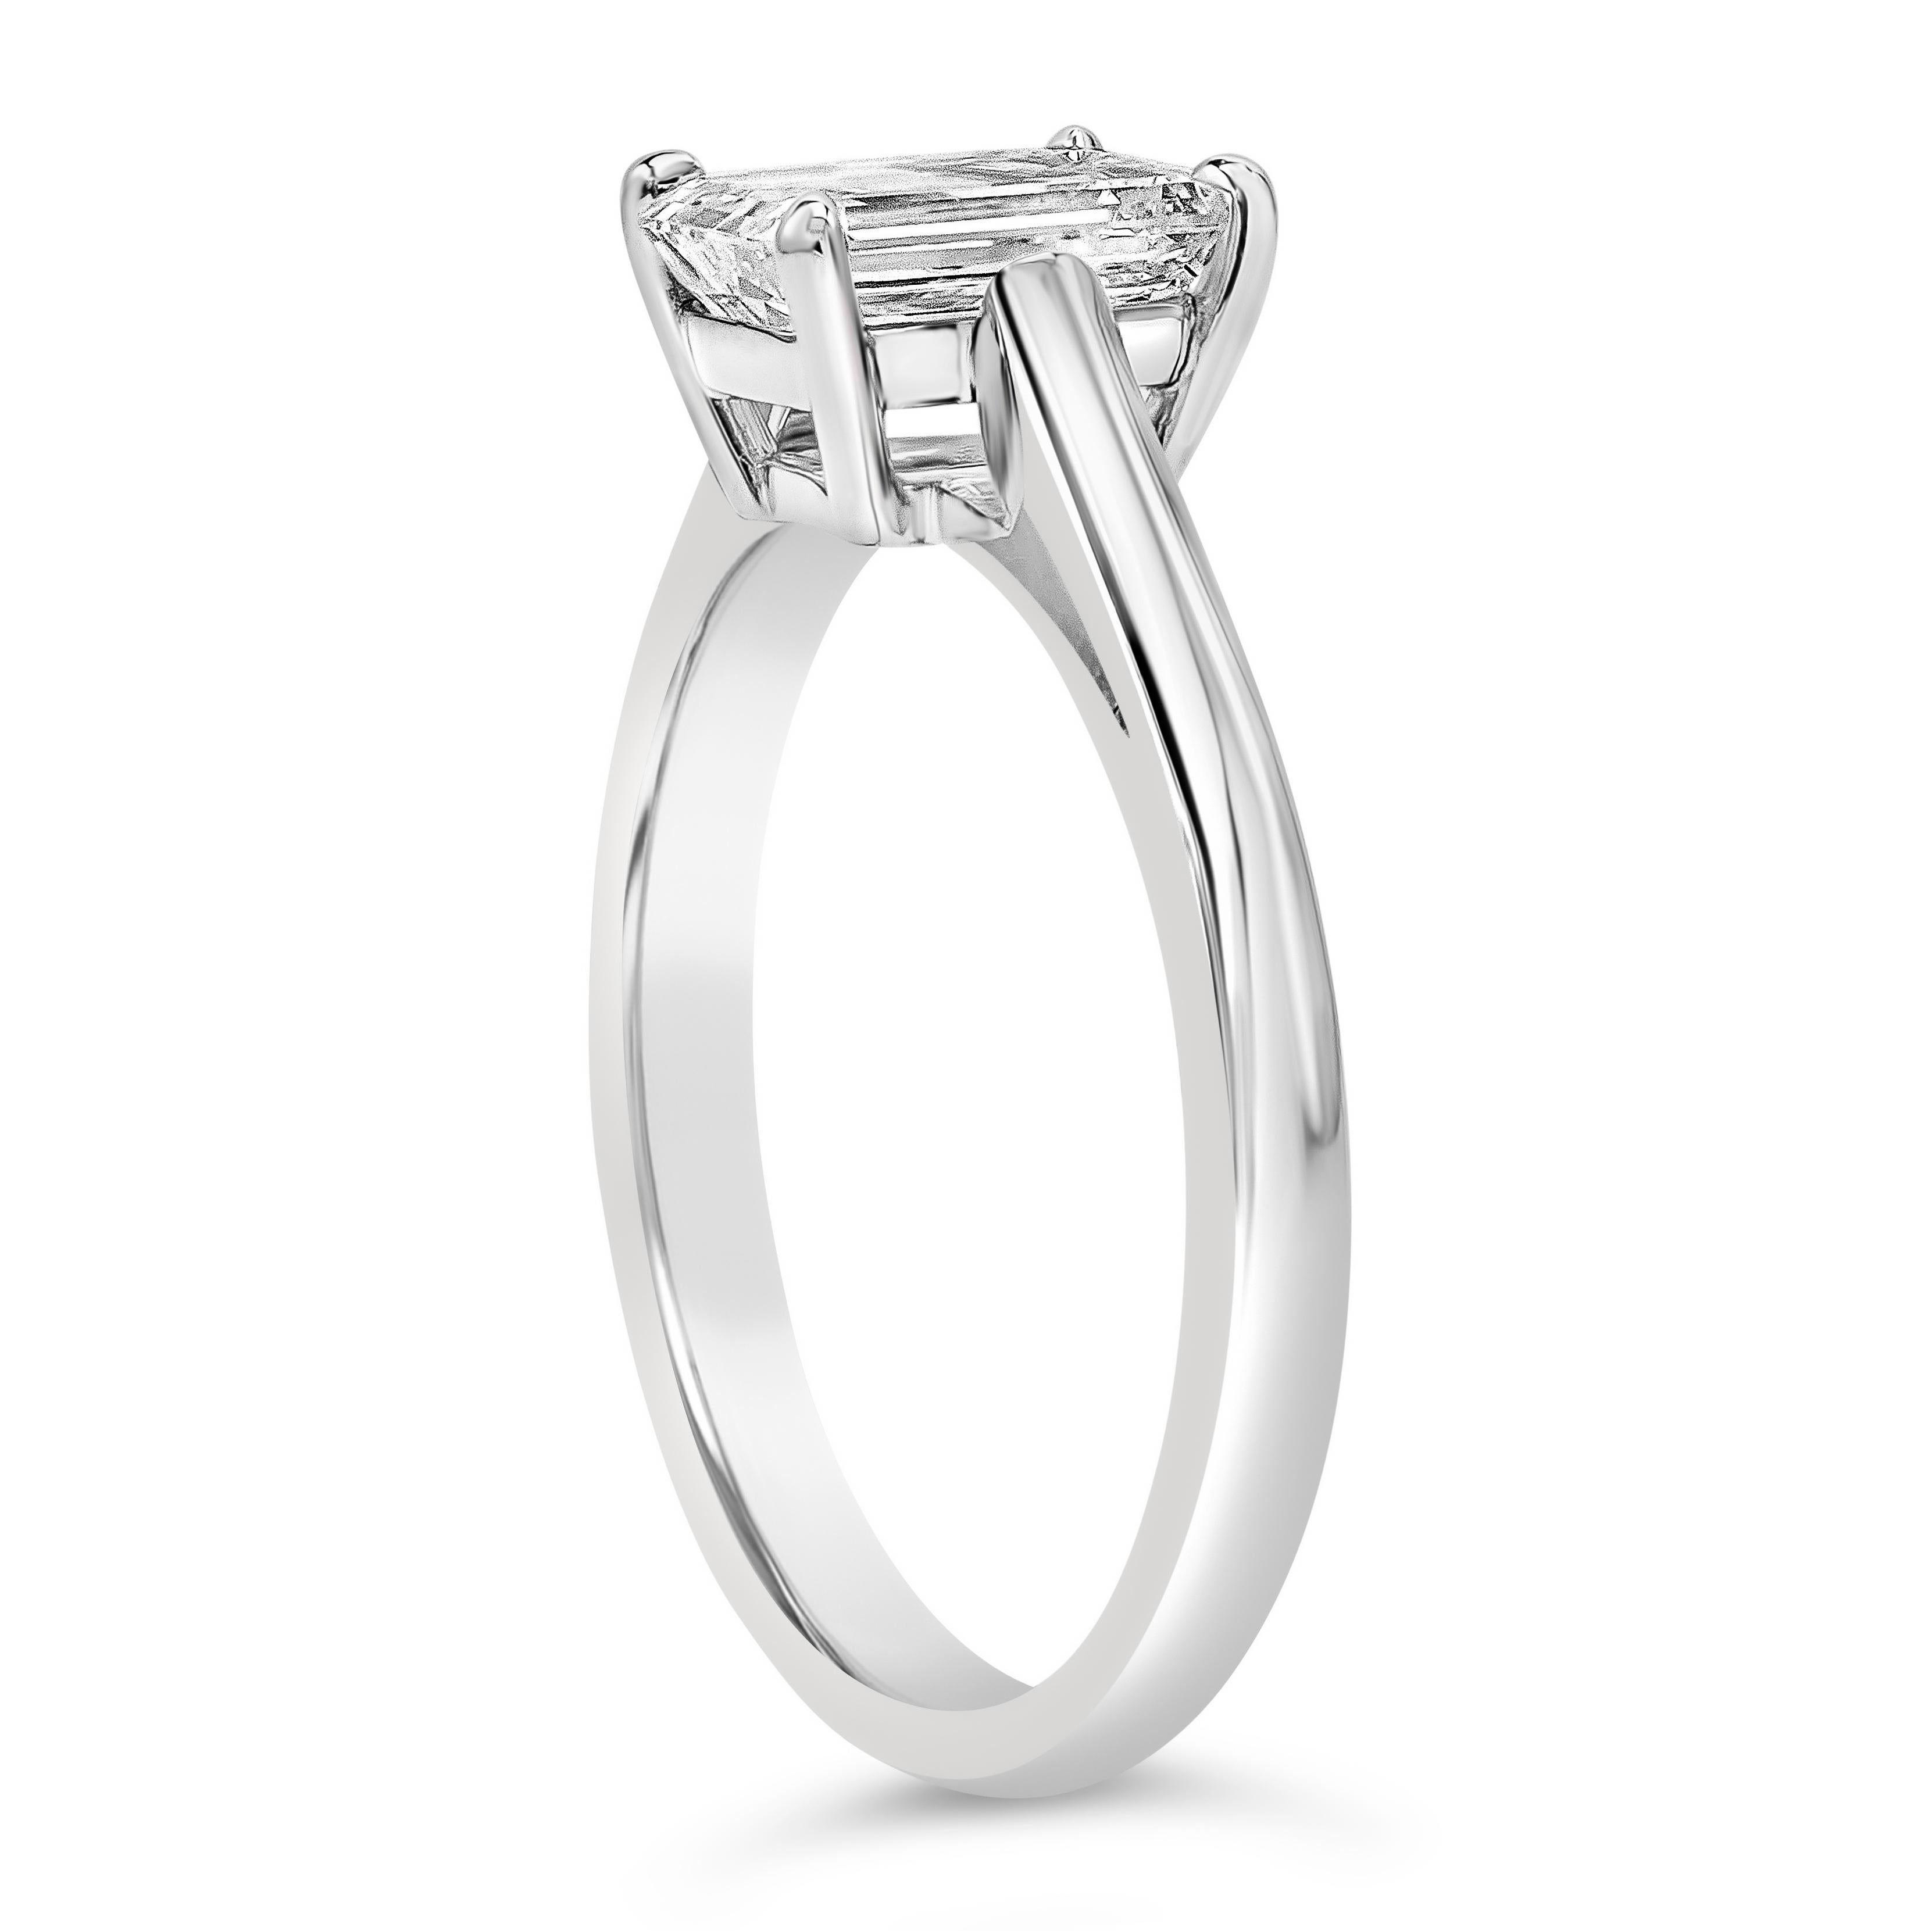 1.27 carat diamond ring